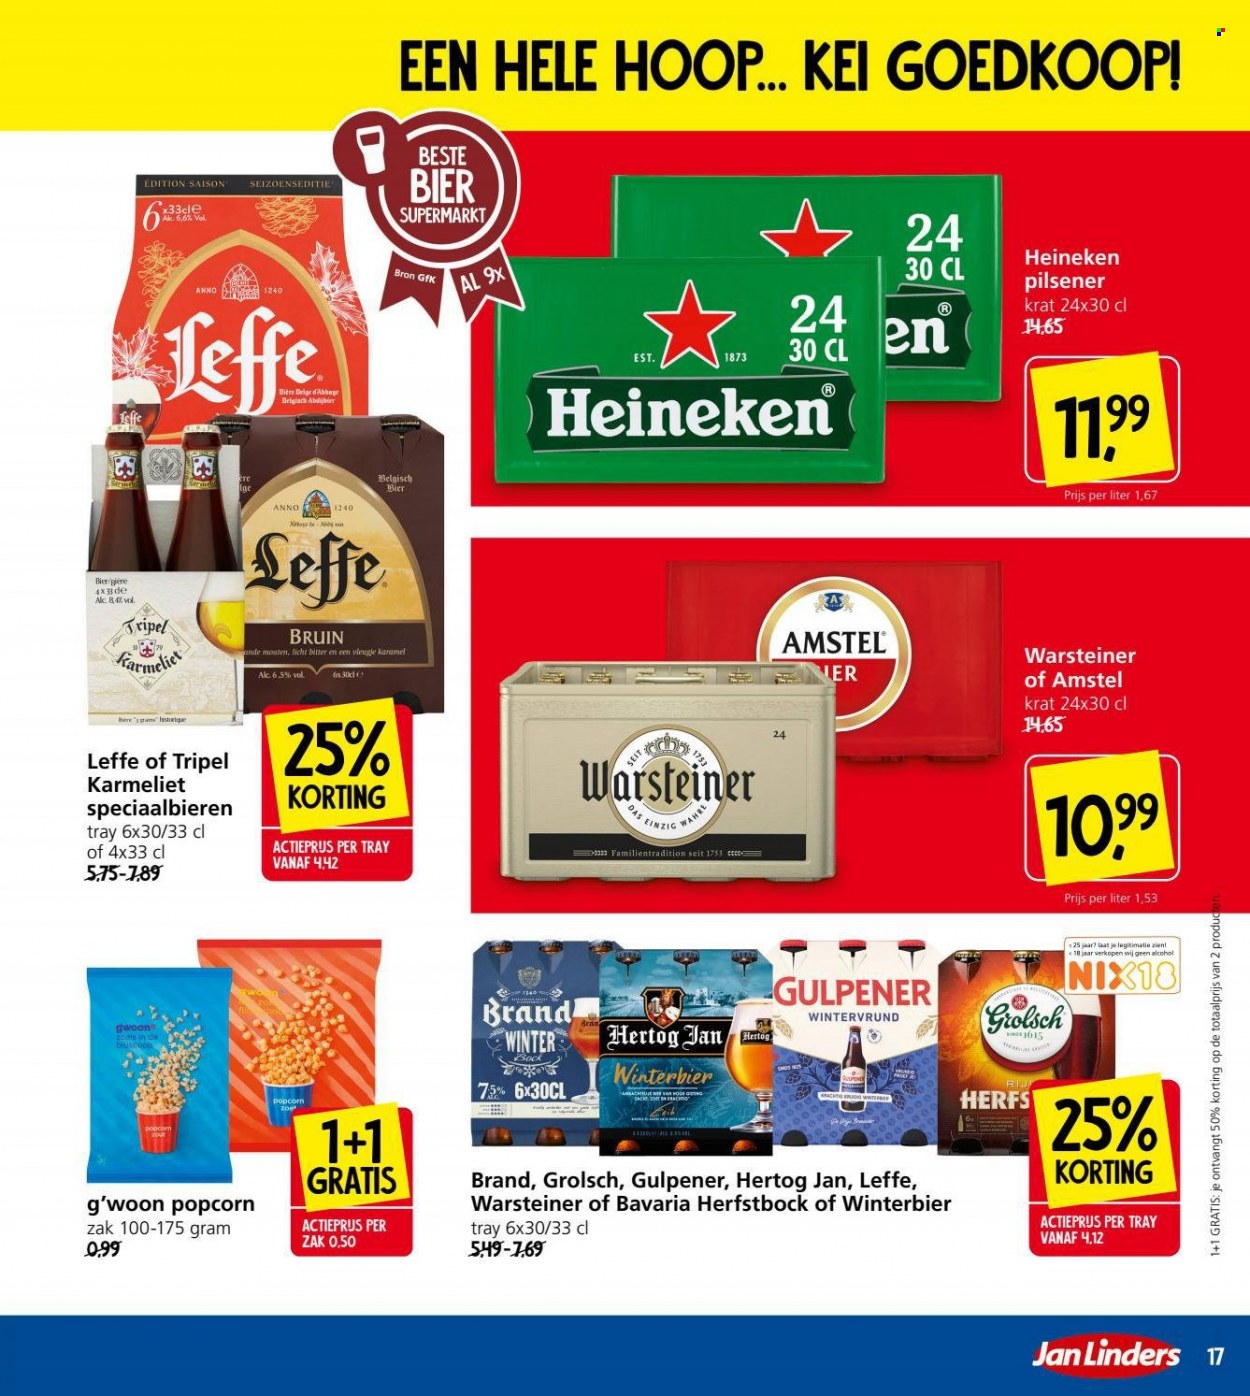 thumbnail - Jan Linders-aanbieding - 10-1-2022 - 16-1-2022 -  producten in de aanbieding - Herfstbock, Leffe, Warsteiner, pilsener, Amstel Bier, Heineken, Hertog Jan, Grolsch, bier, popcorn. Pagina 17.